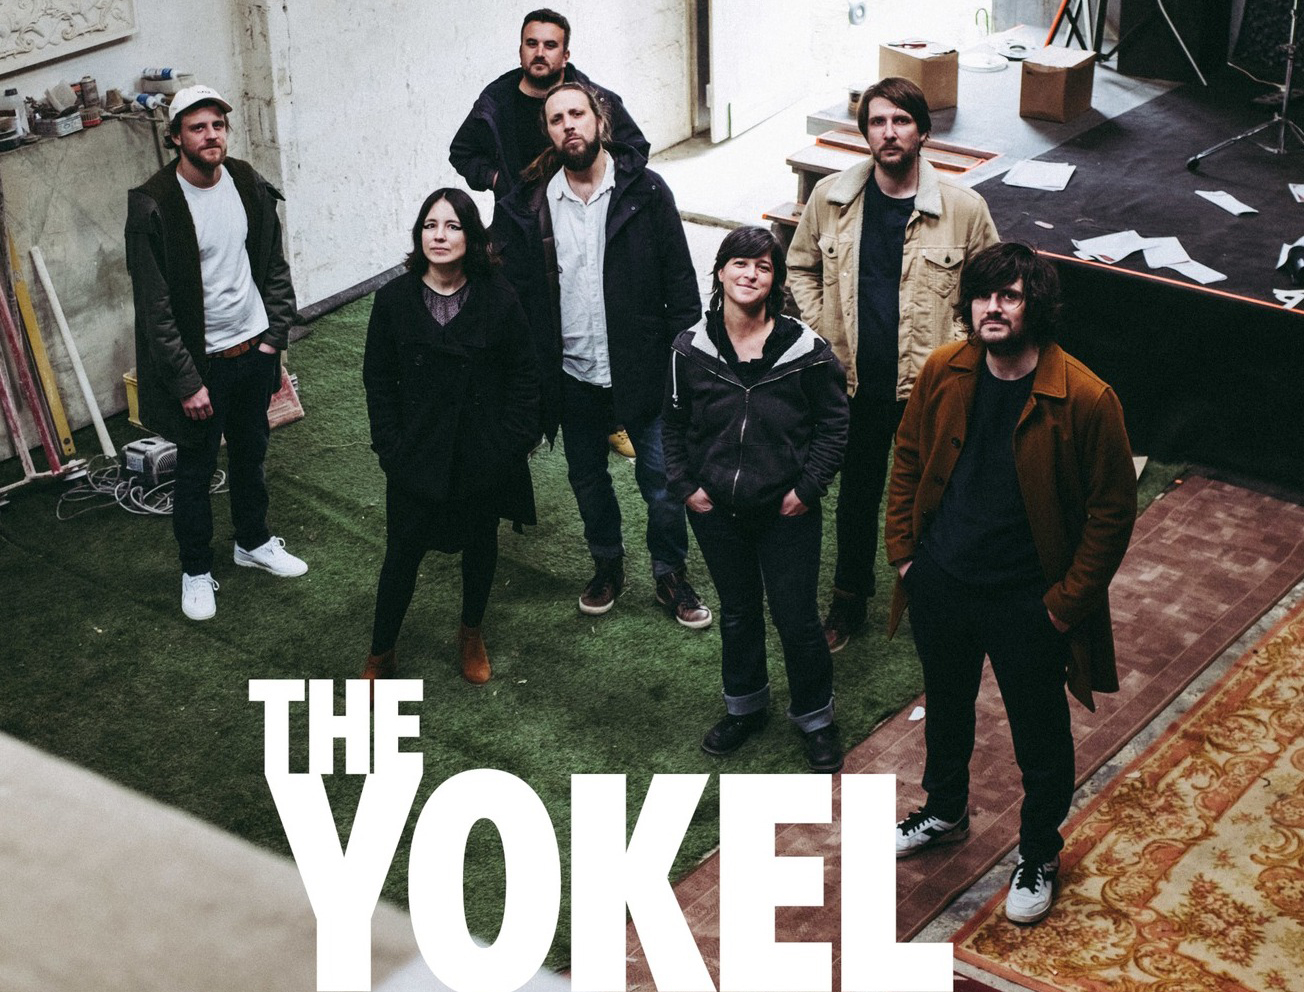 The Yokel